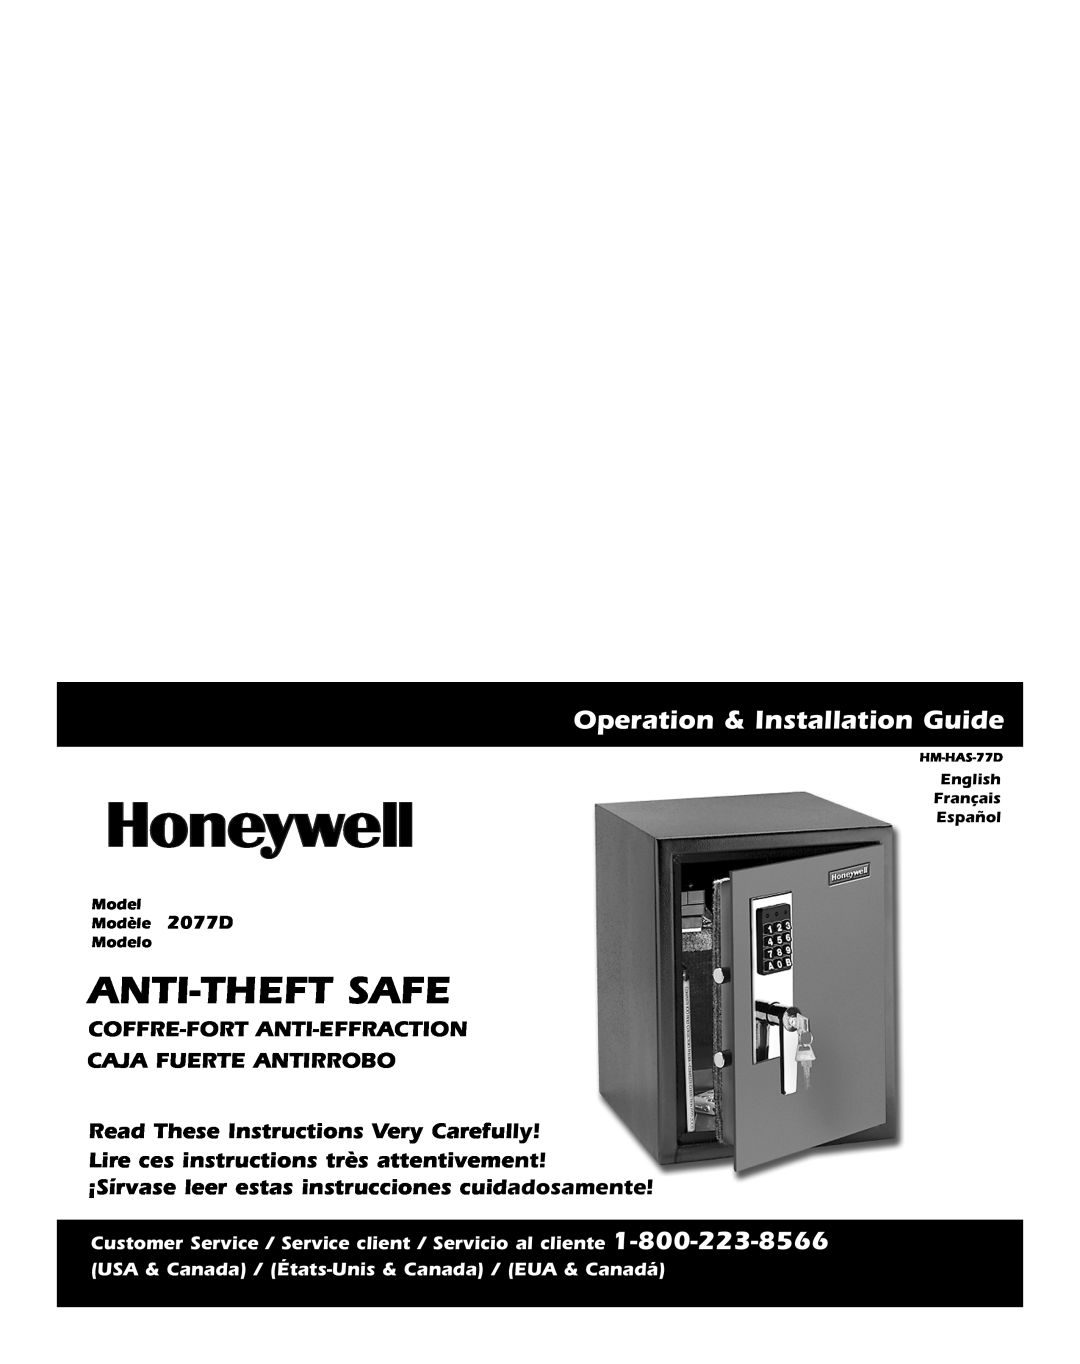 Honeywell 2077D manual Anti-Theftsafe, Operation & Installation Guide, Coffre-Fort Anti-Effraction Caja Fuerte Antirrobo 